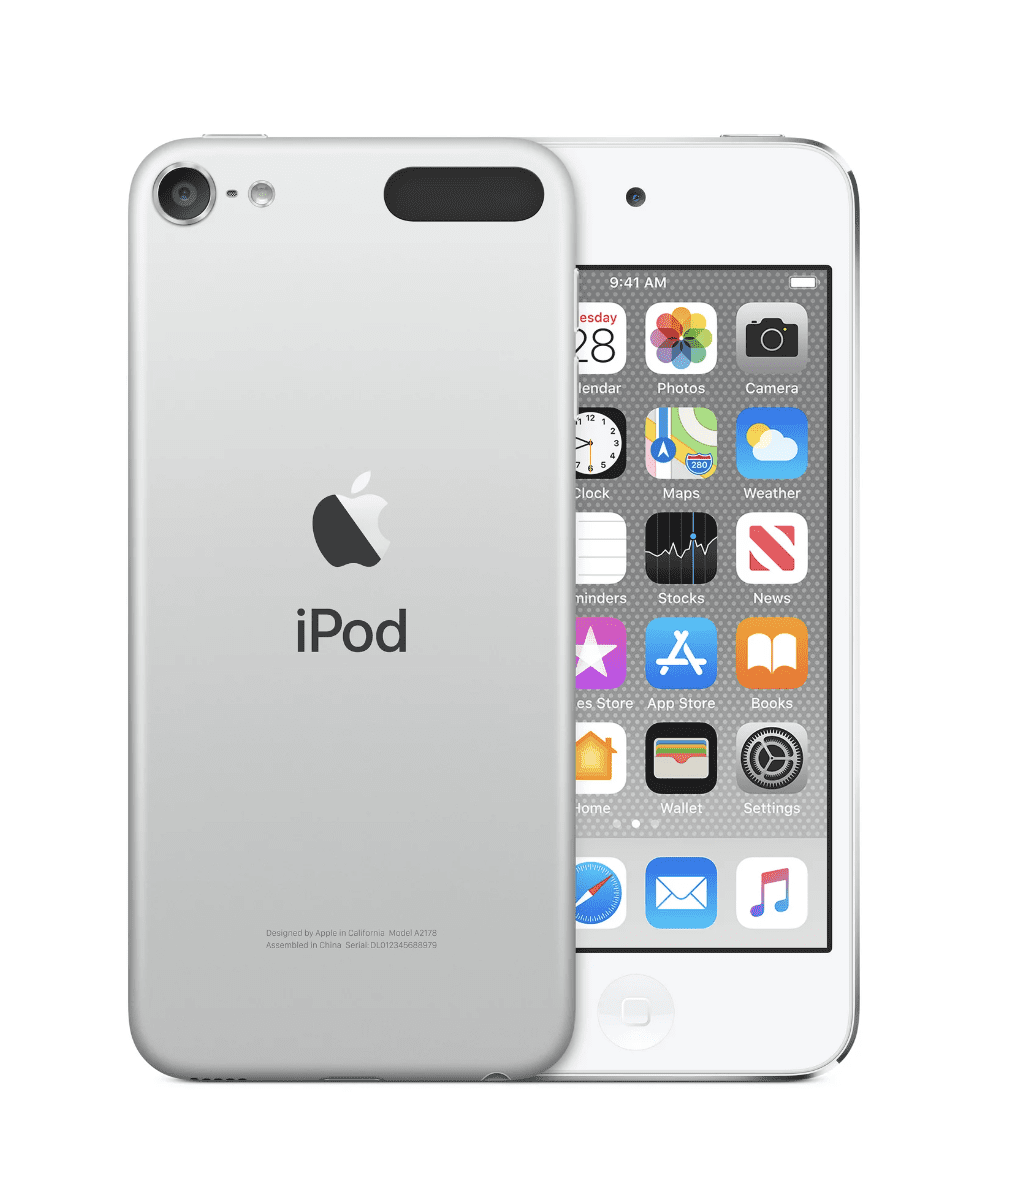 Apple iPod touch 7th Generation 128GB - Blue (New Model) - Walmart.com